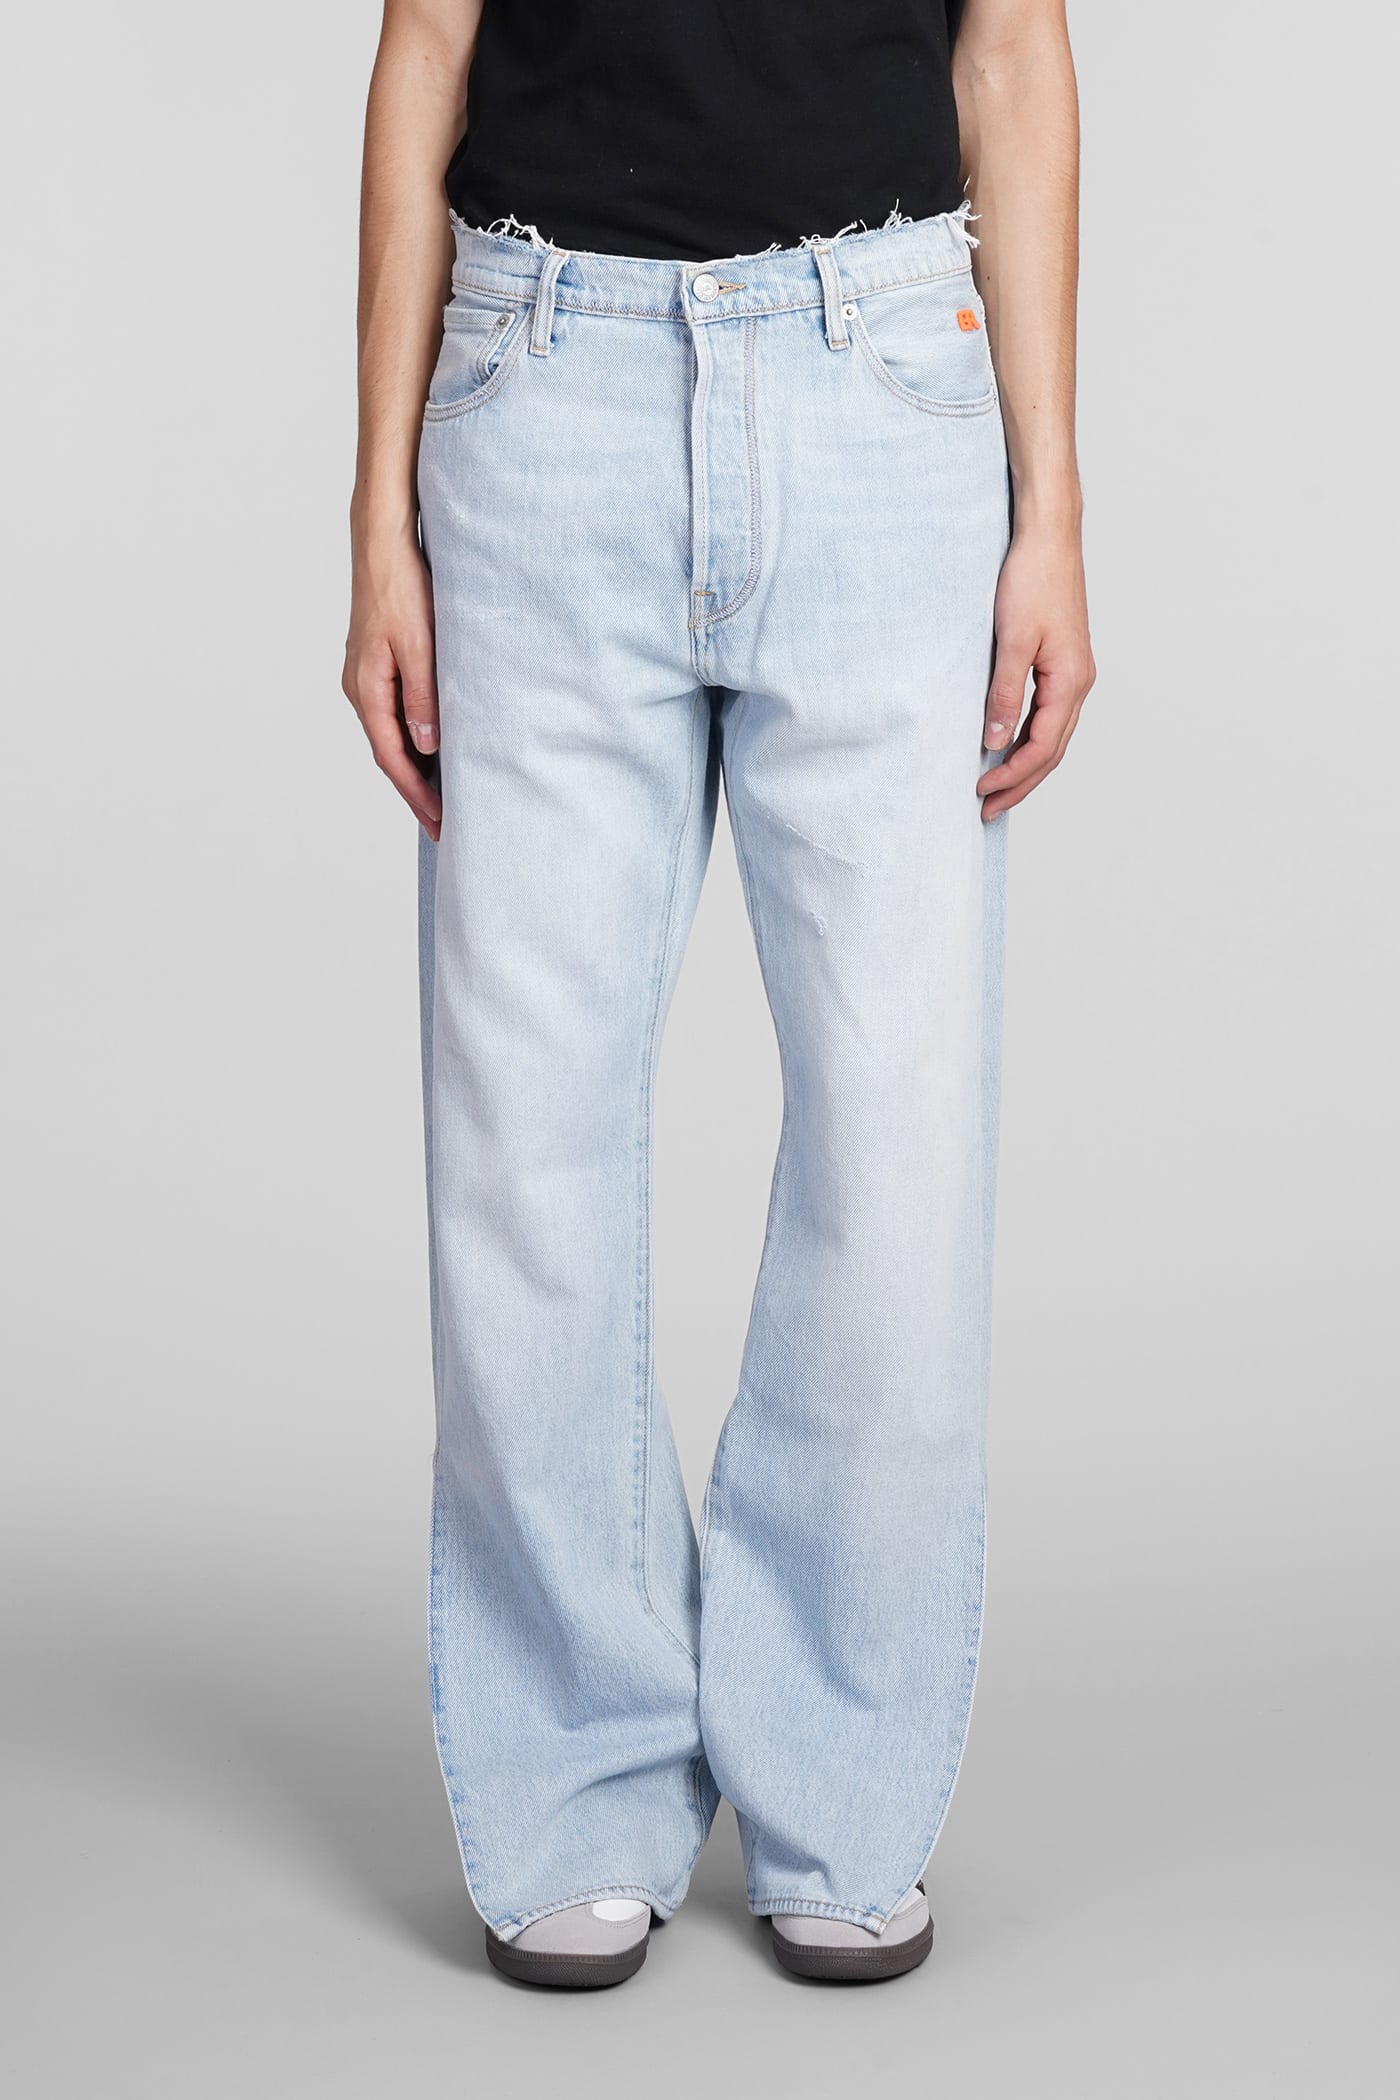 Levi's Jeans In Blue Cotton